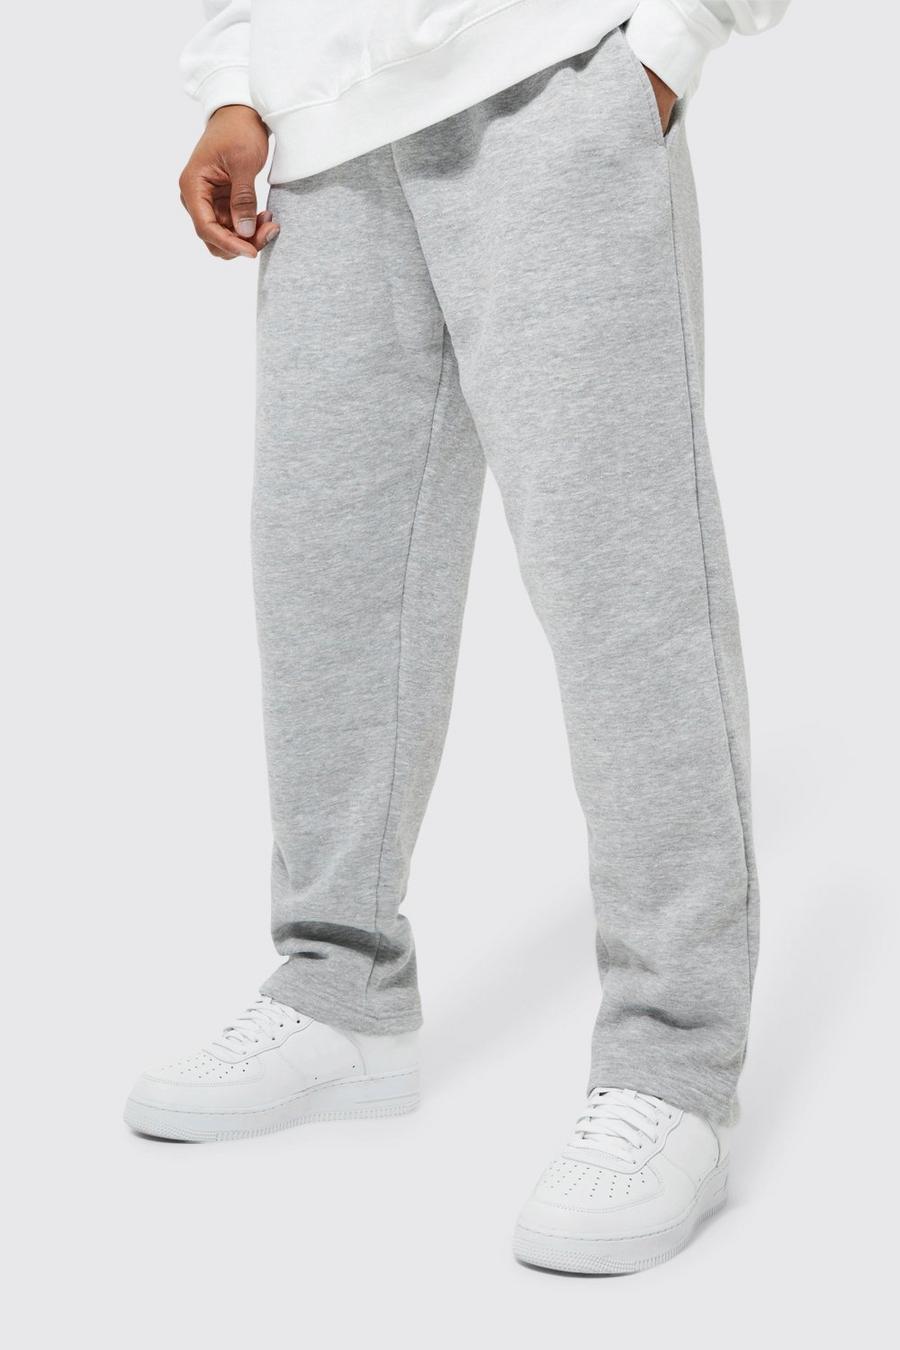 Topman straight leg sweatpants in gray heather